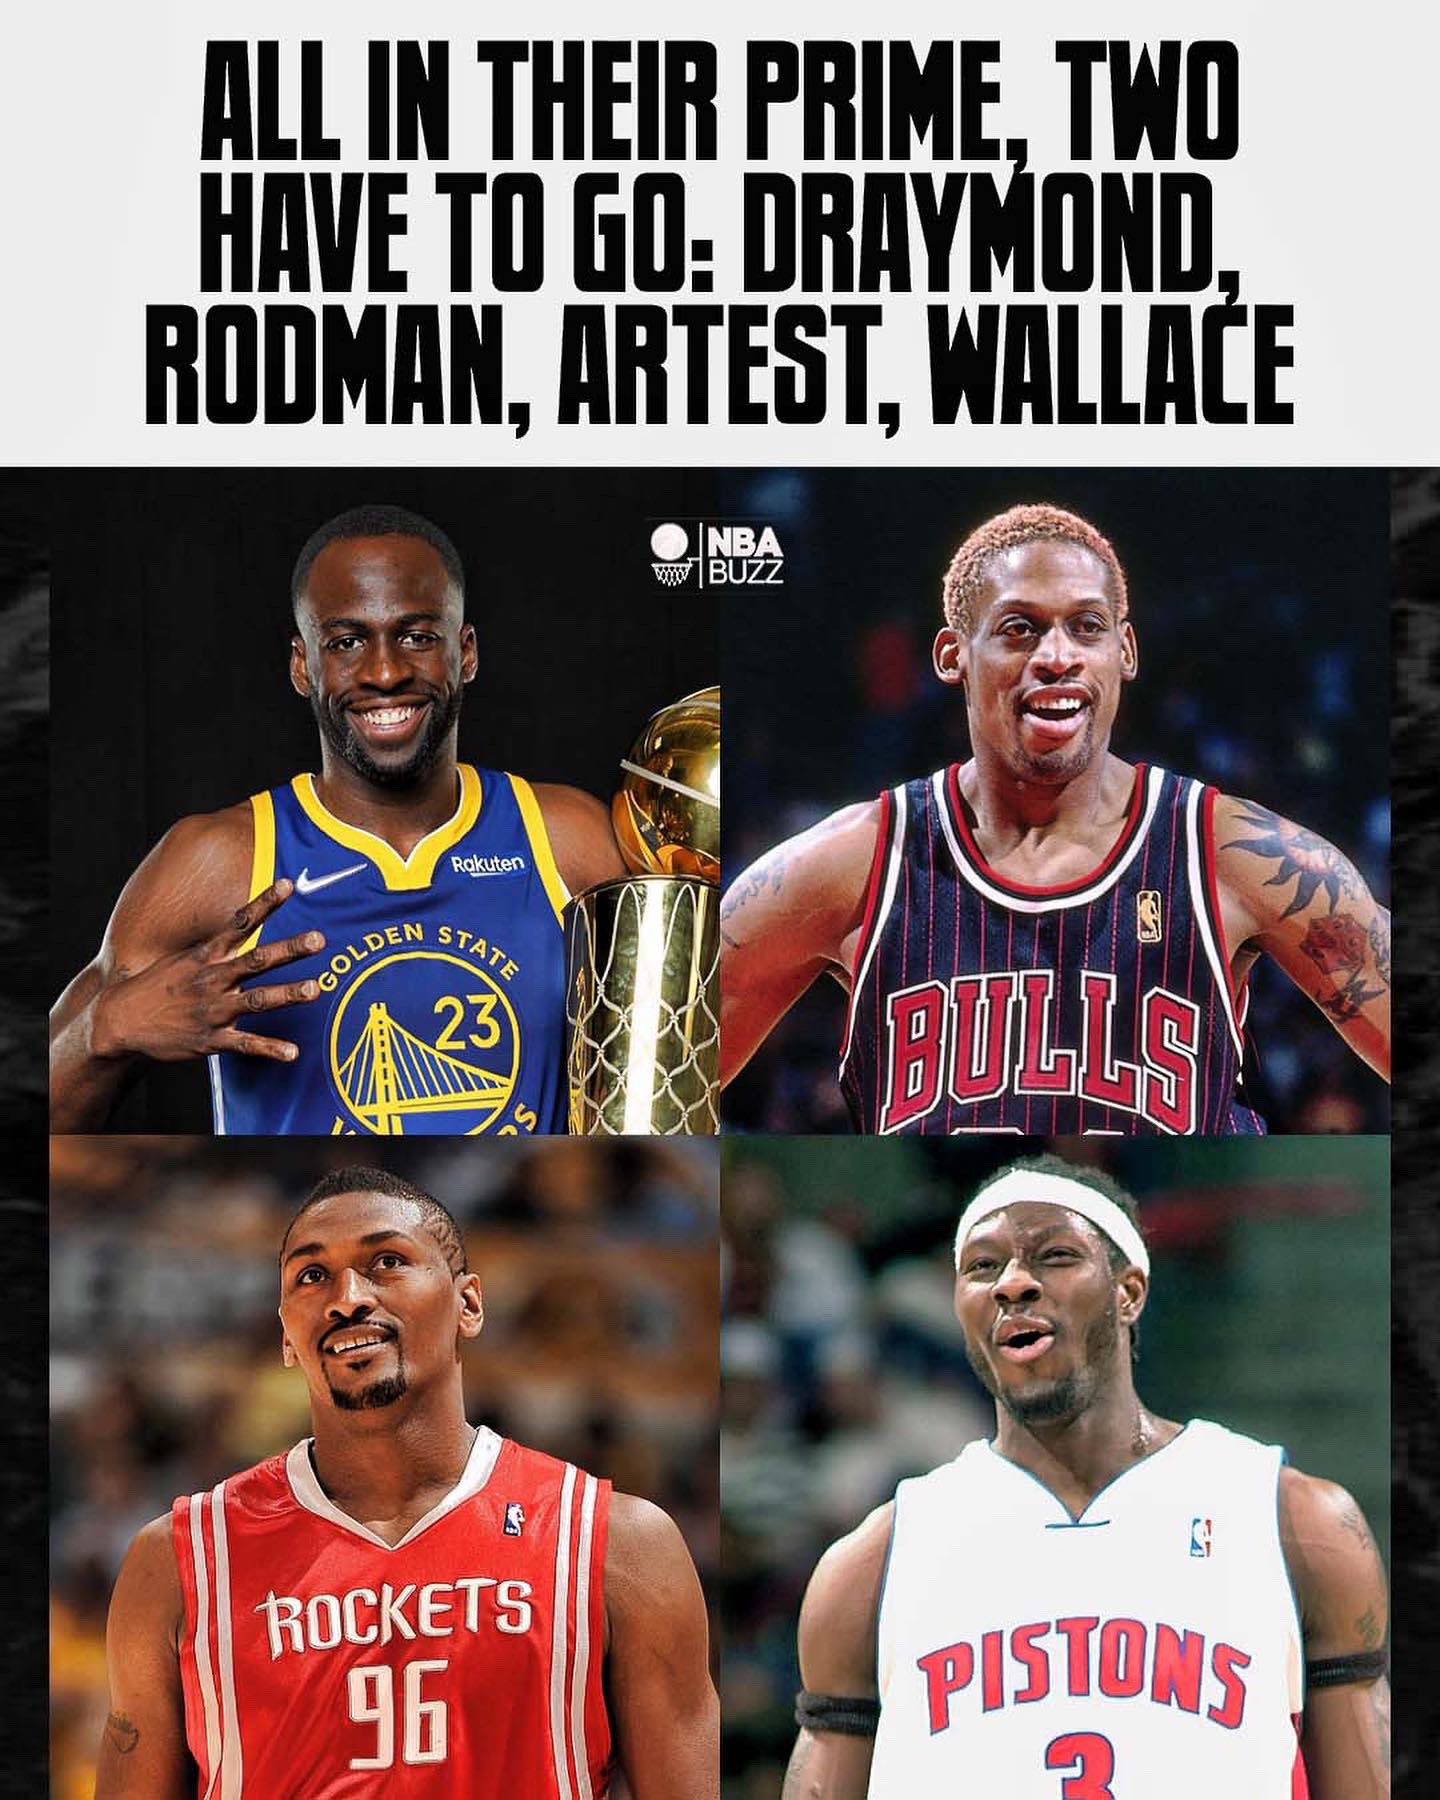 Whose NBA career is better? Dennis Rodman vs. Ben Wallace